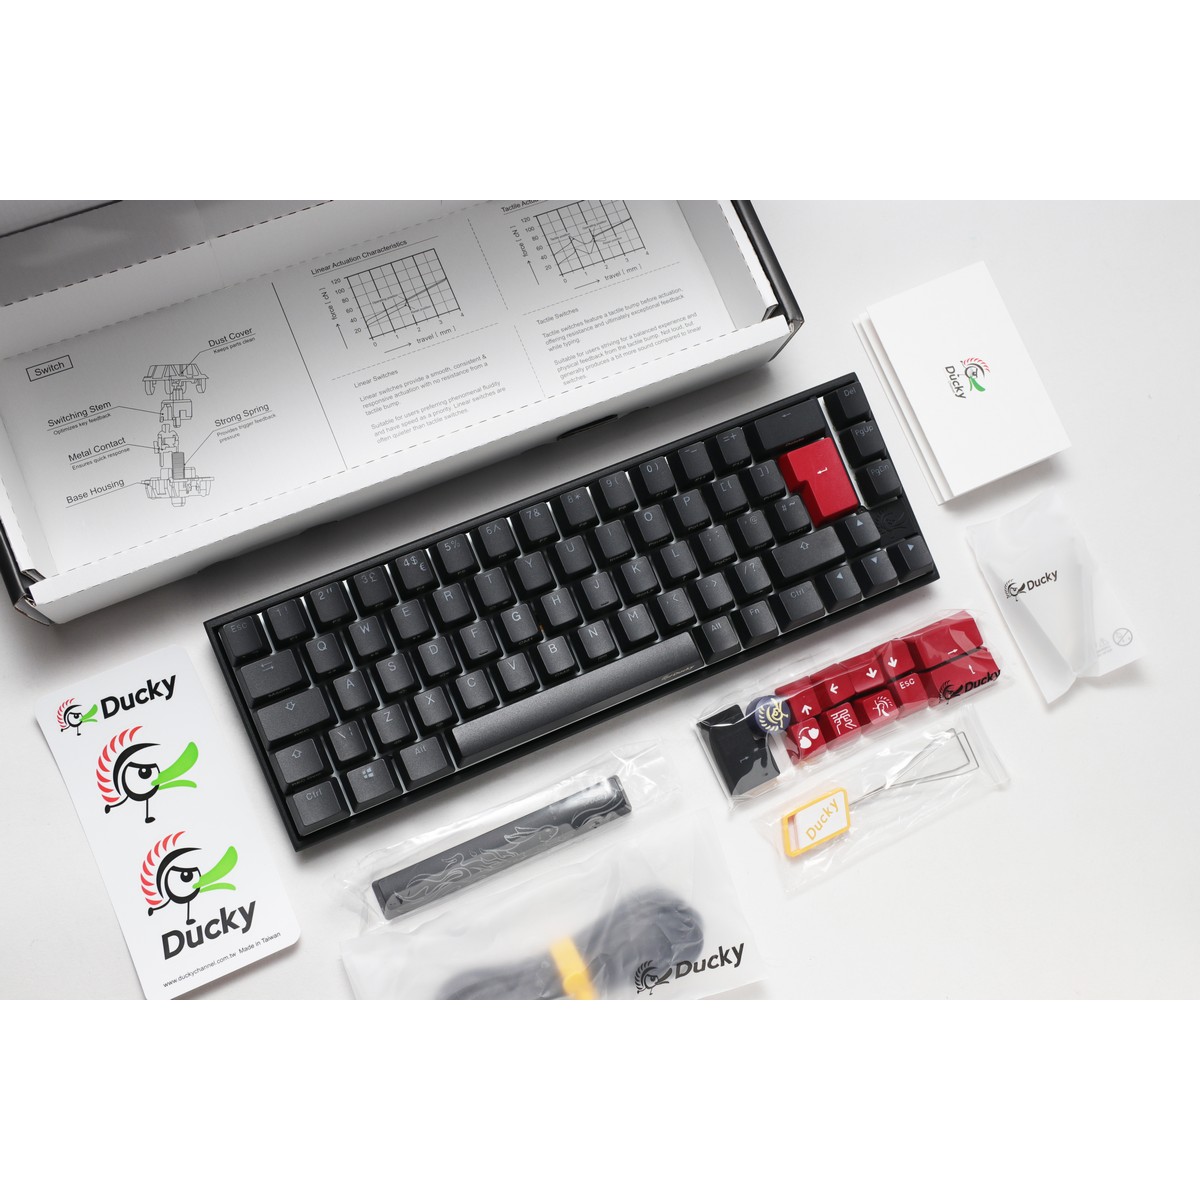 Ducky - Ducky Mecha Pro SF 65% USB RGB Mechanical Gaming Keyboard Cherry MX Silent Red -